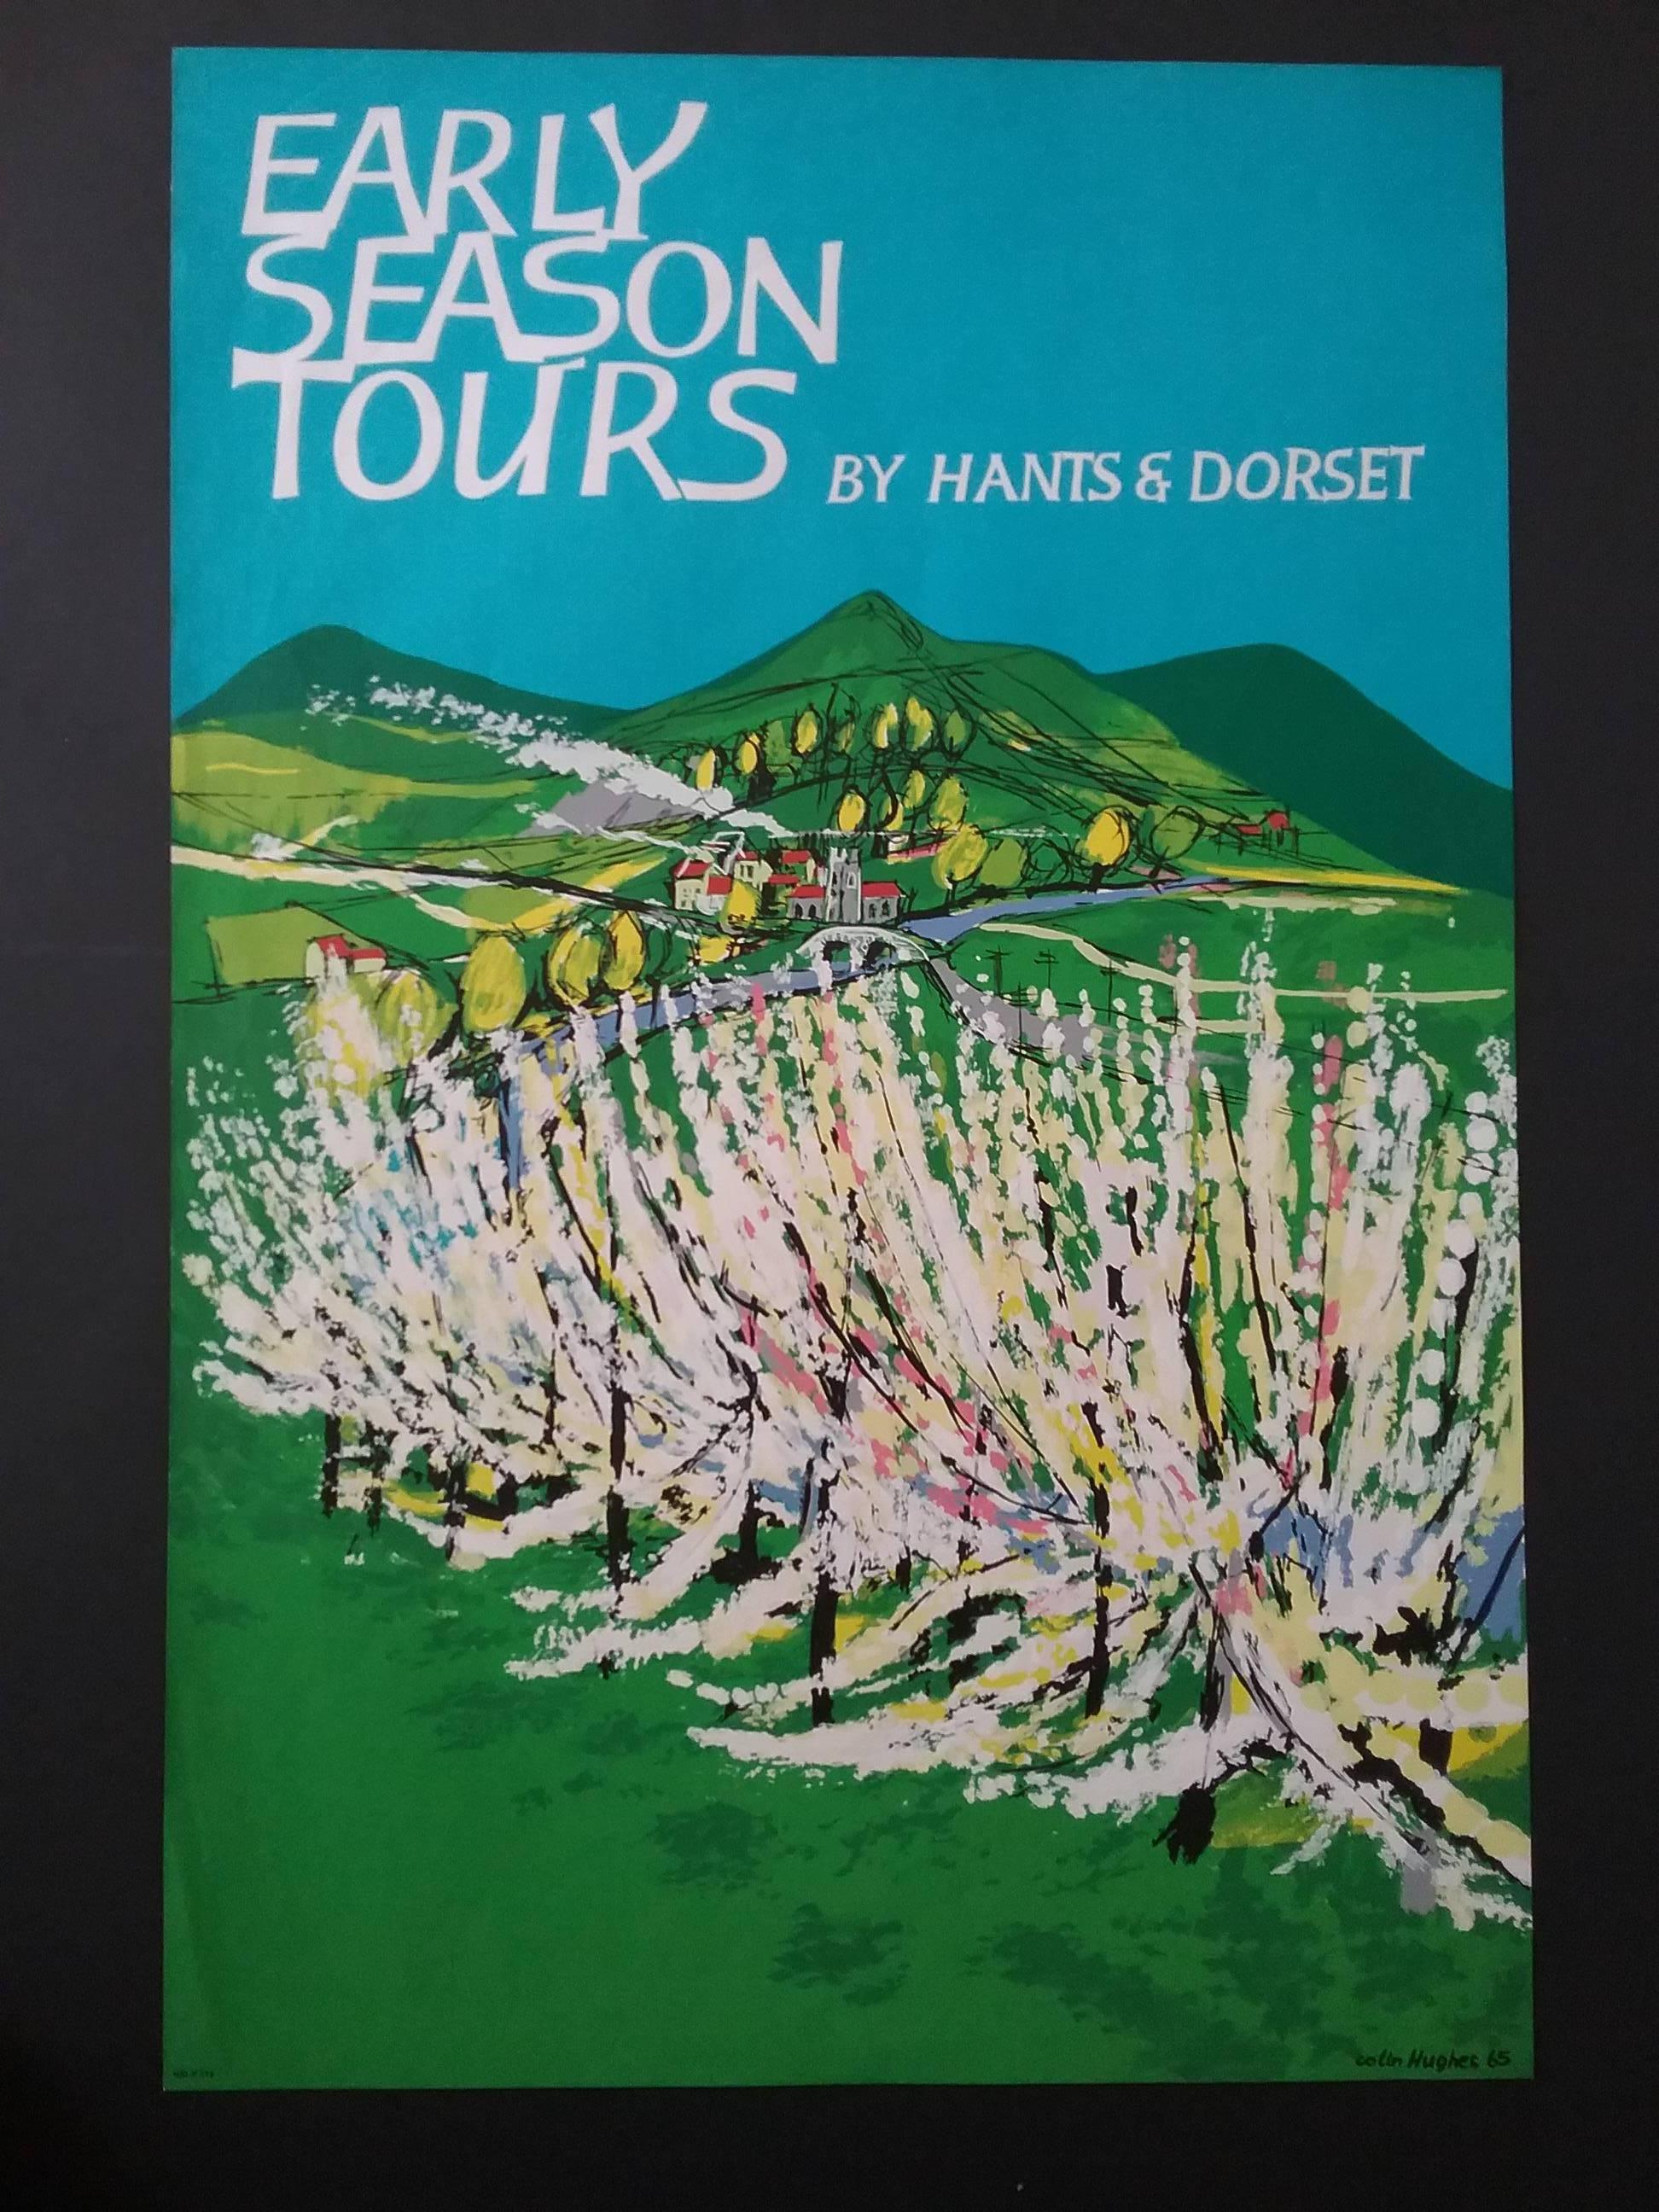 Early Season Tours by Hants & Dorset - Print by Colin Hughes